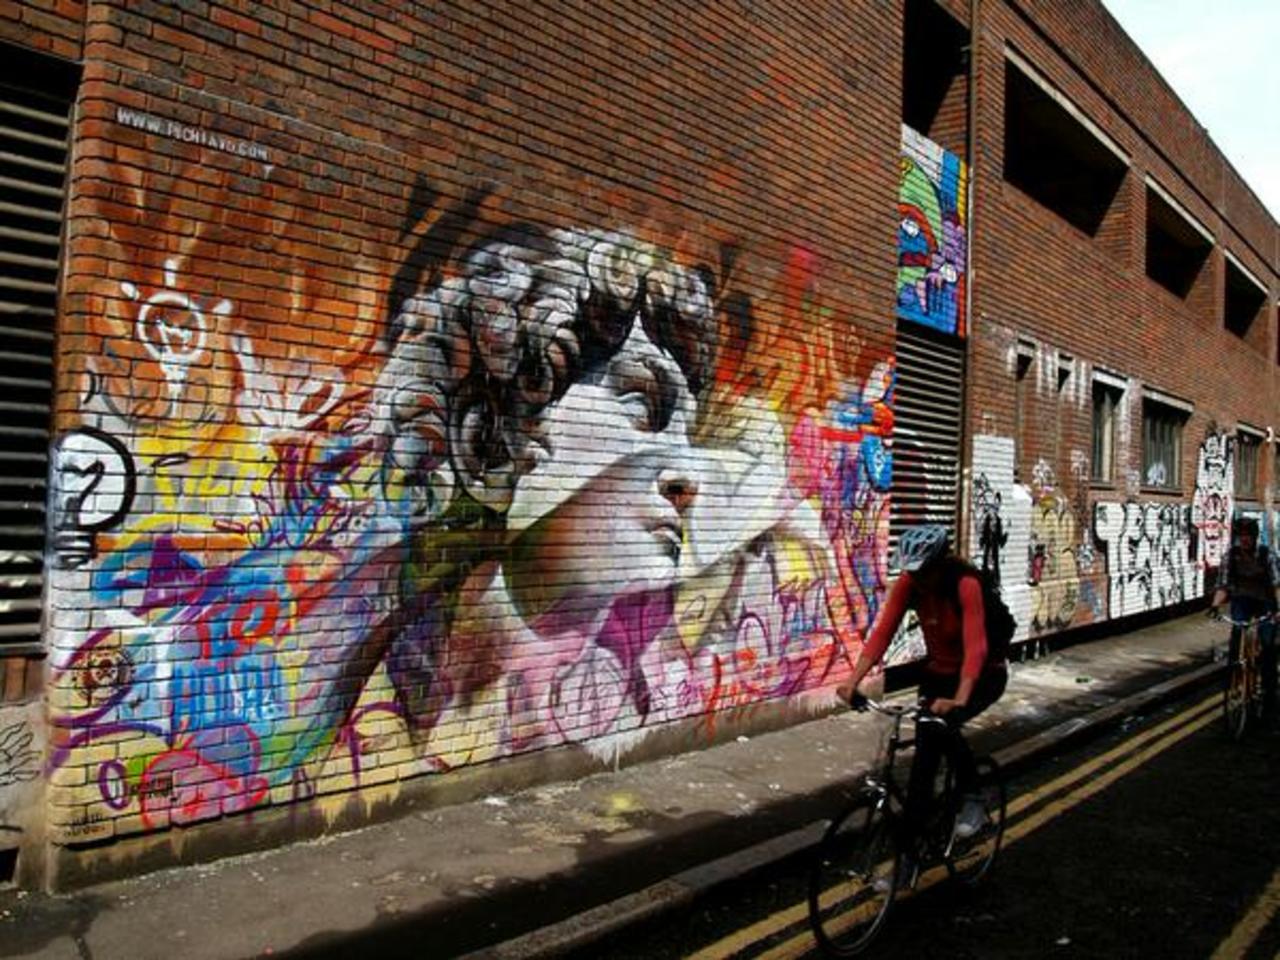 Artista: PichiAvo 
Londres, Reino Unido. 
#art #streetart #mural #graffiti http://t.co/wBJCFP7OVz